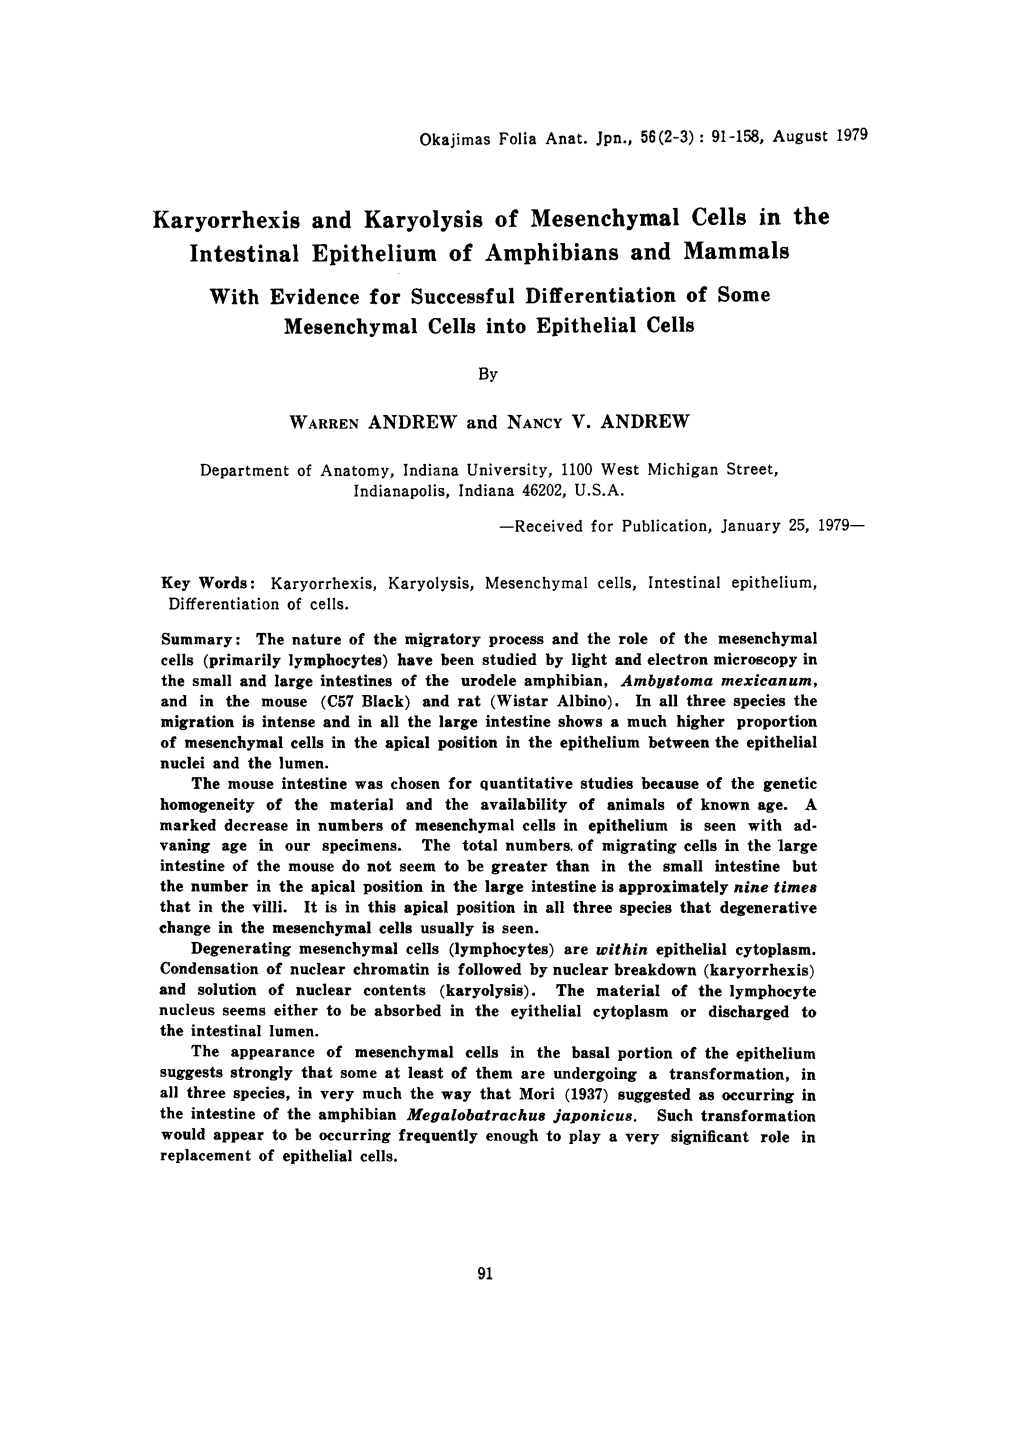 Karyorrhexis and Karyolysis of Mesenchymal Cells in the Intestinal Epithelium of Amphibians and Mammals